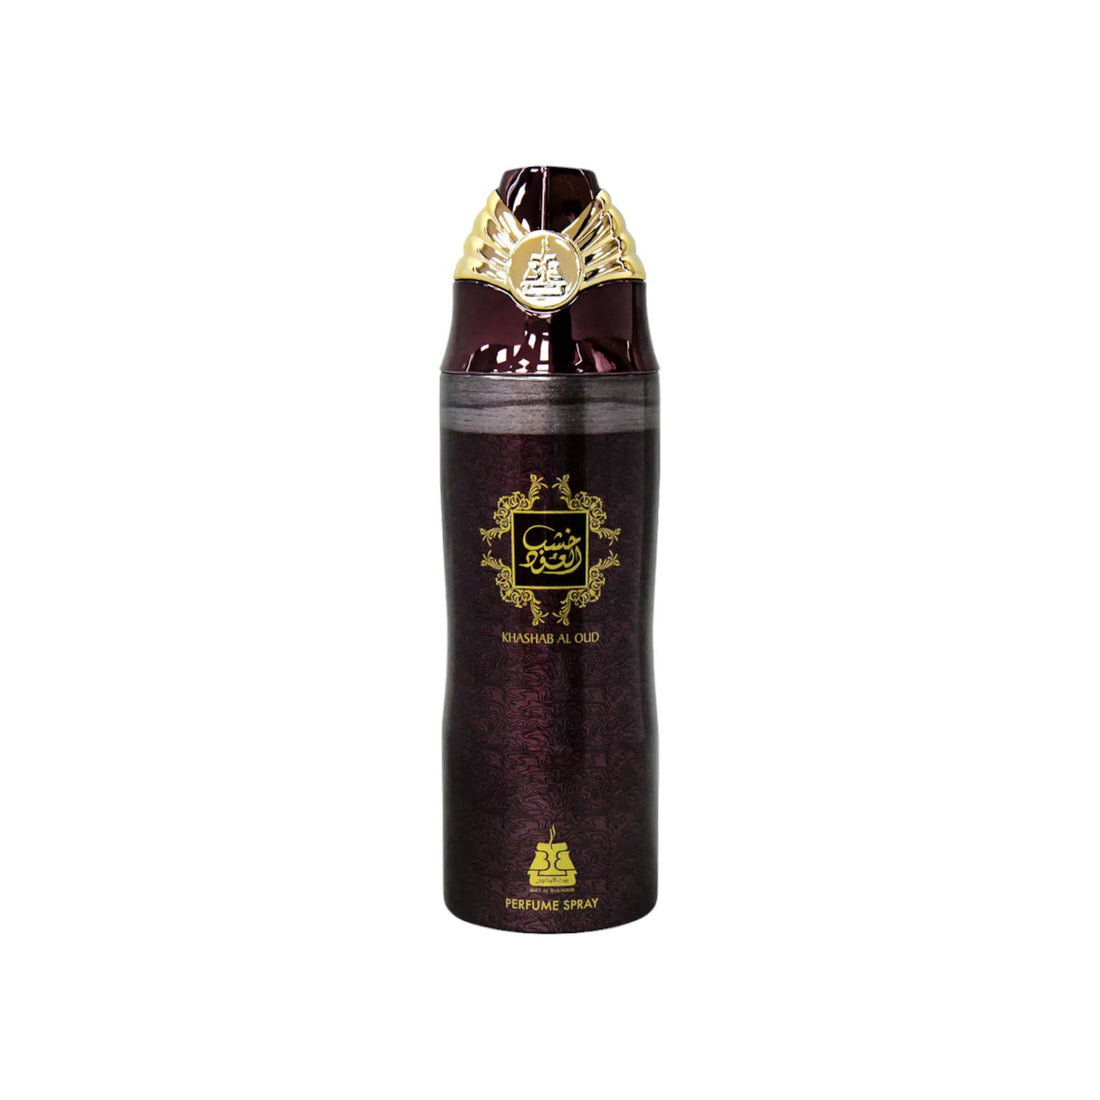 Bait Al Bakhoor Khashab Al Oud Deodorant Bottle - "Elegant 200ml deodorant spray bottle.